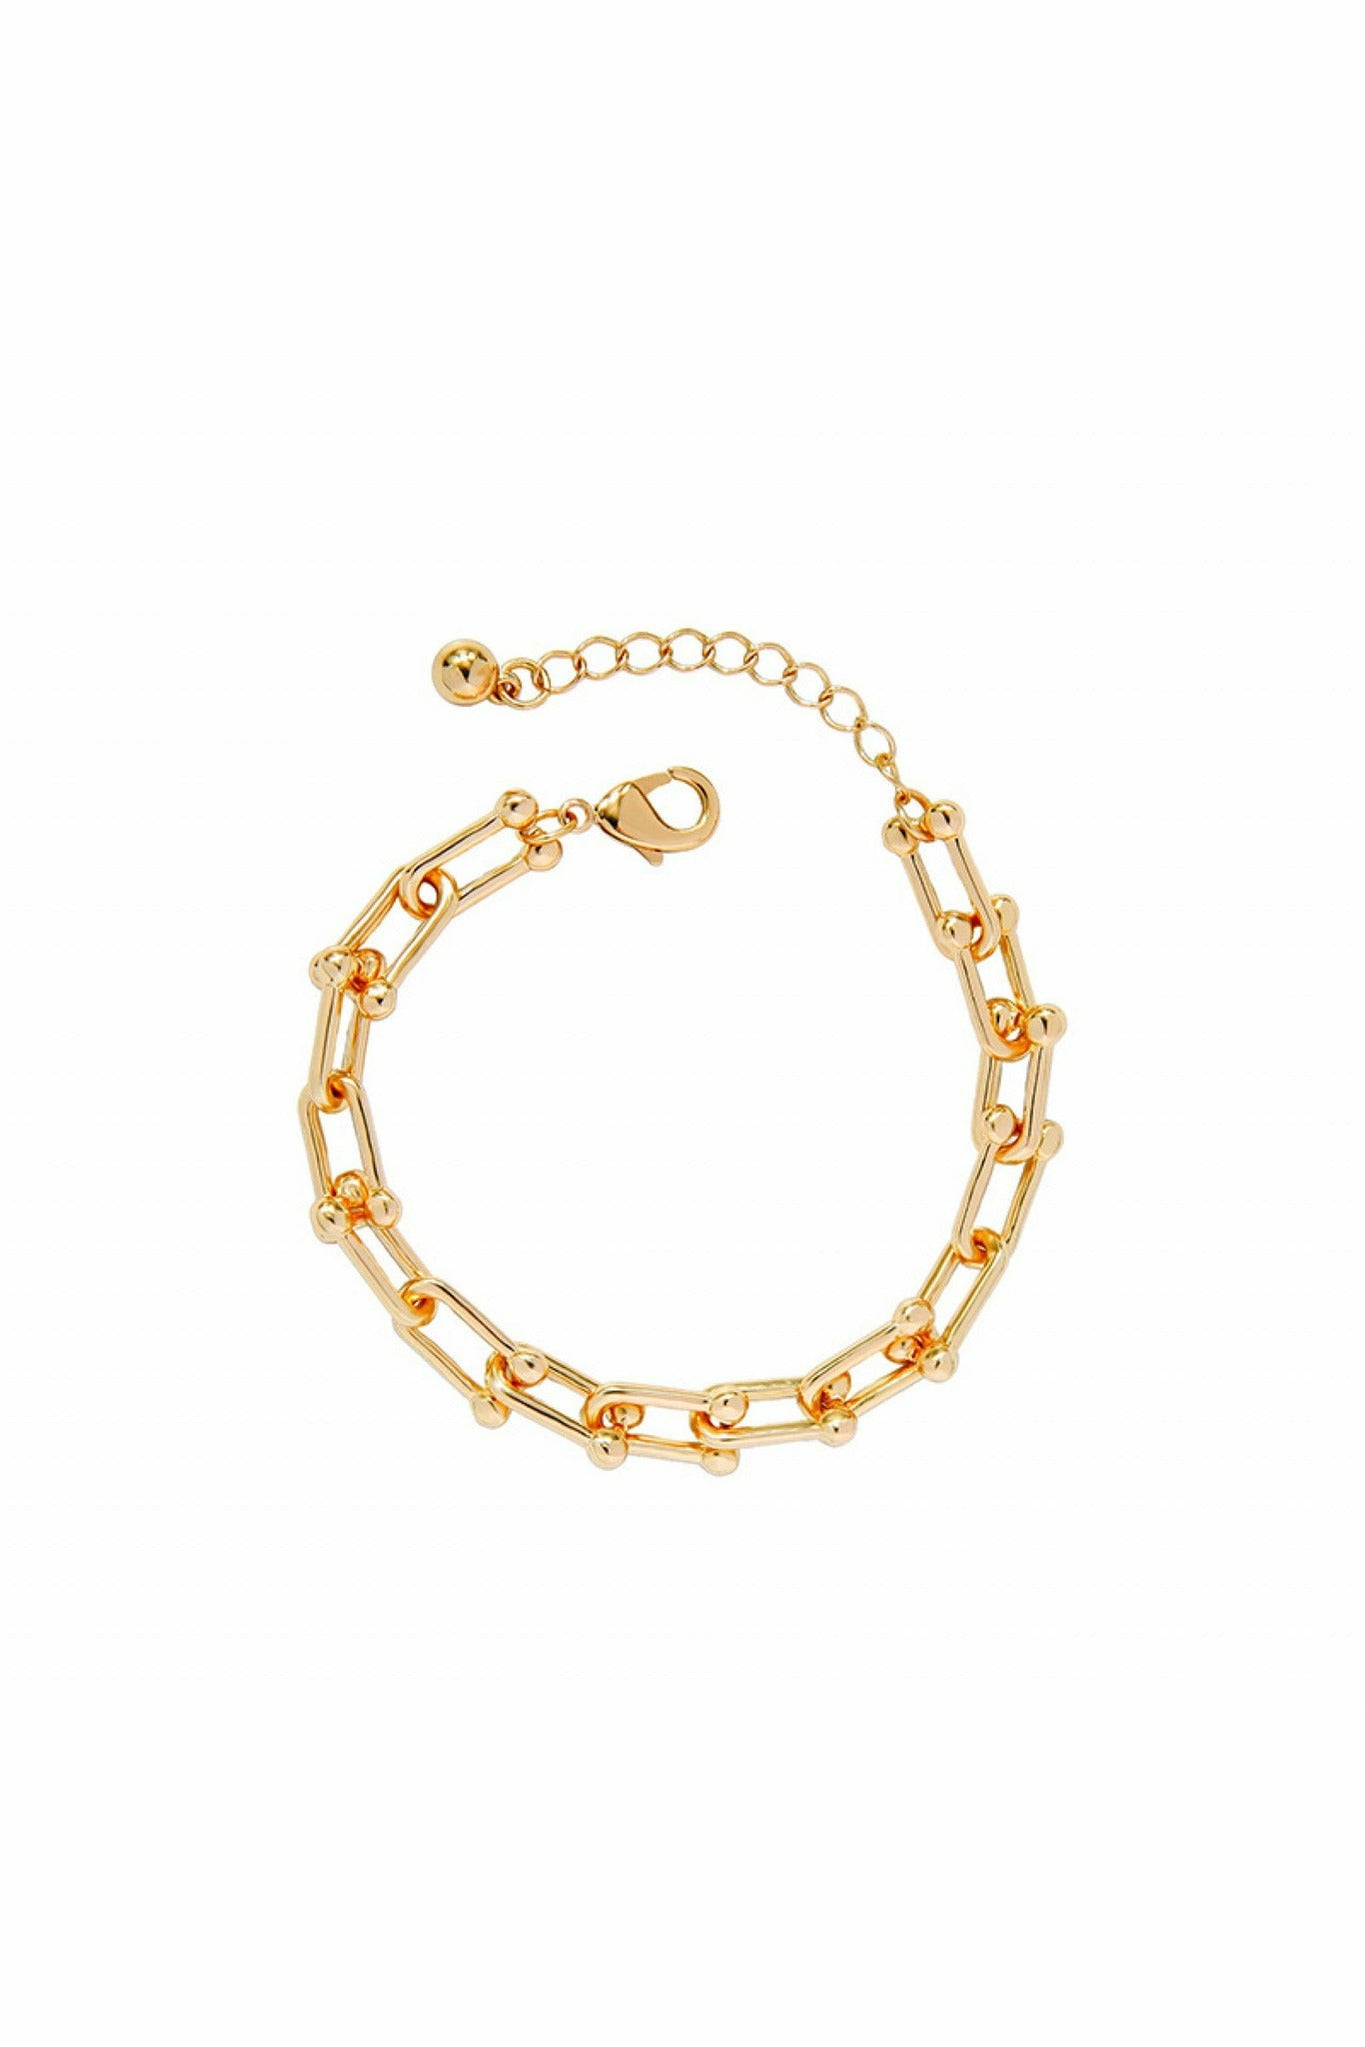 Links Bracelet In Gold LB007G